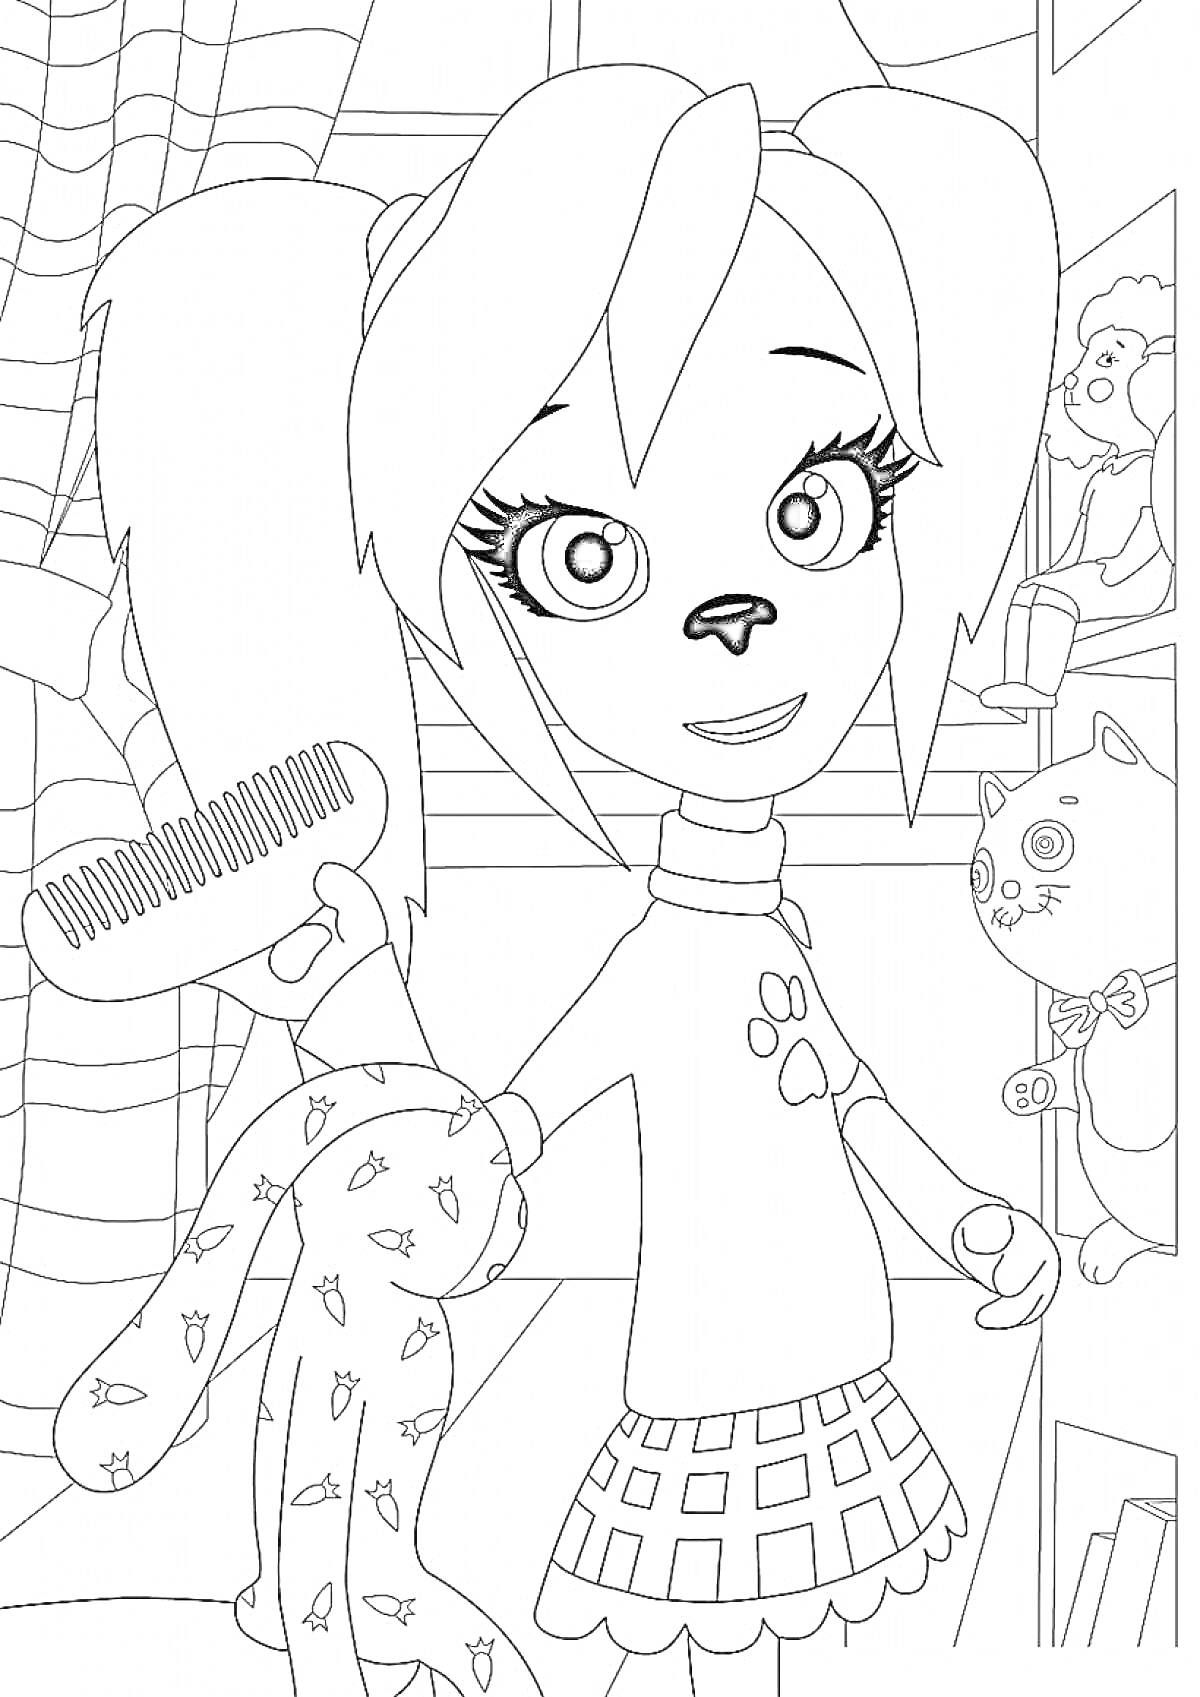 Раскраска Девочка-собачка с расческой и полотенцем, комната с полками и игрушками